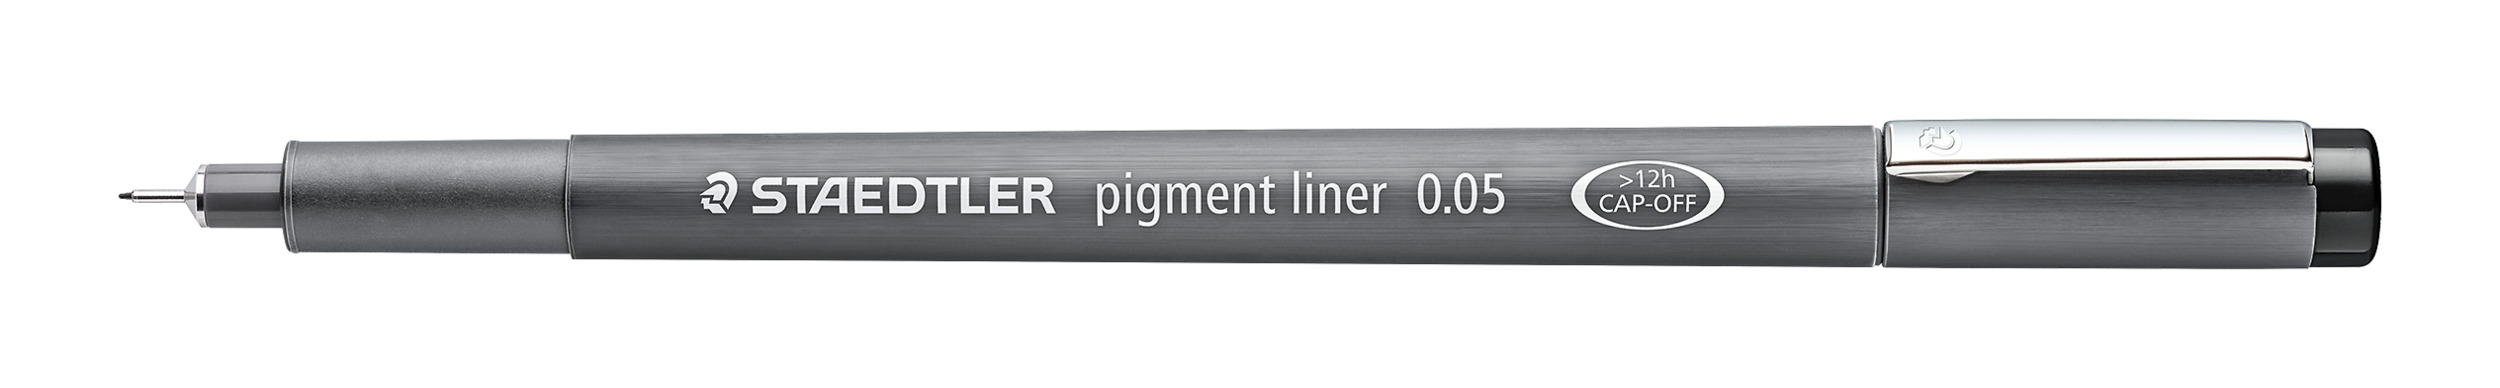 Pigment liner 0.05mm